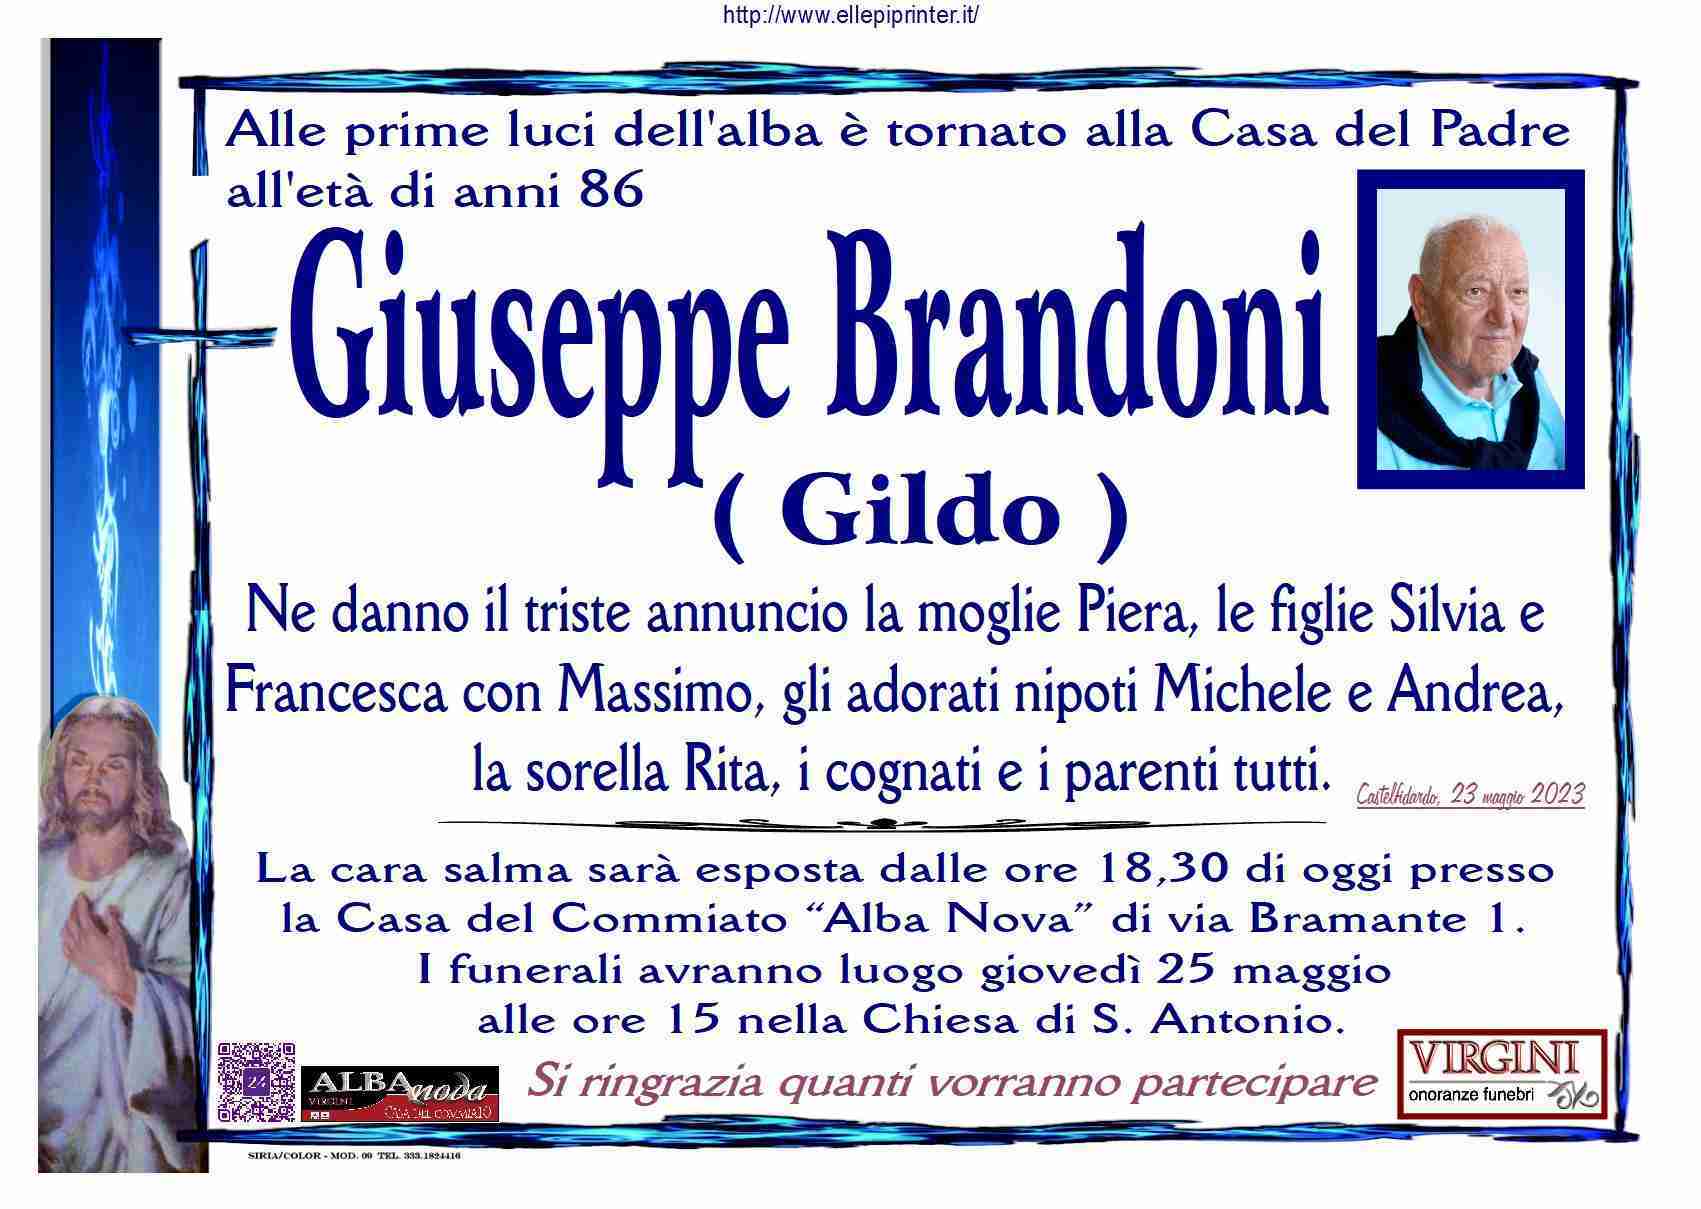 Giuseppe Brandoni